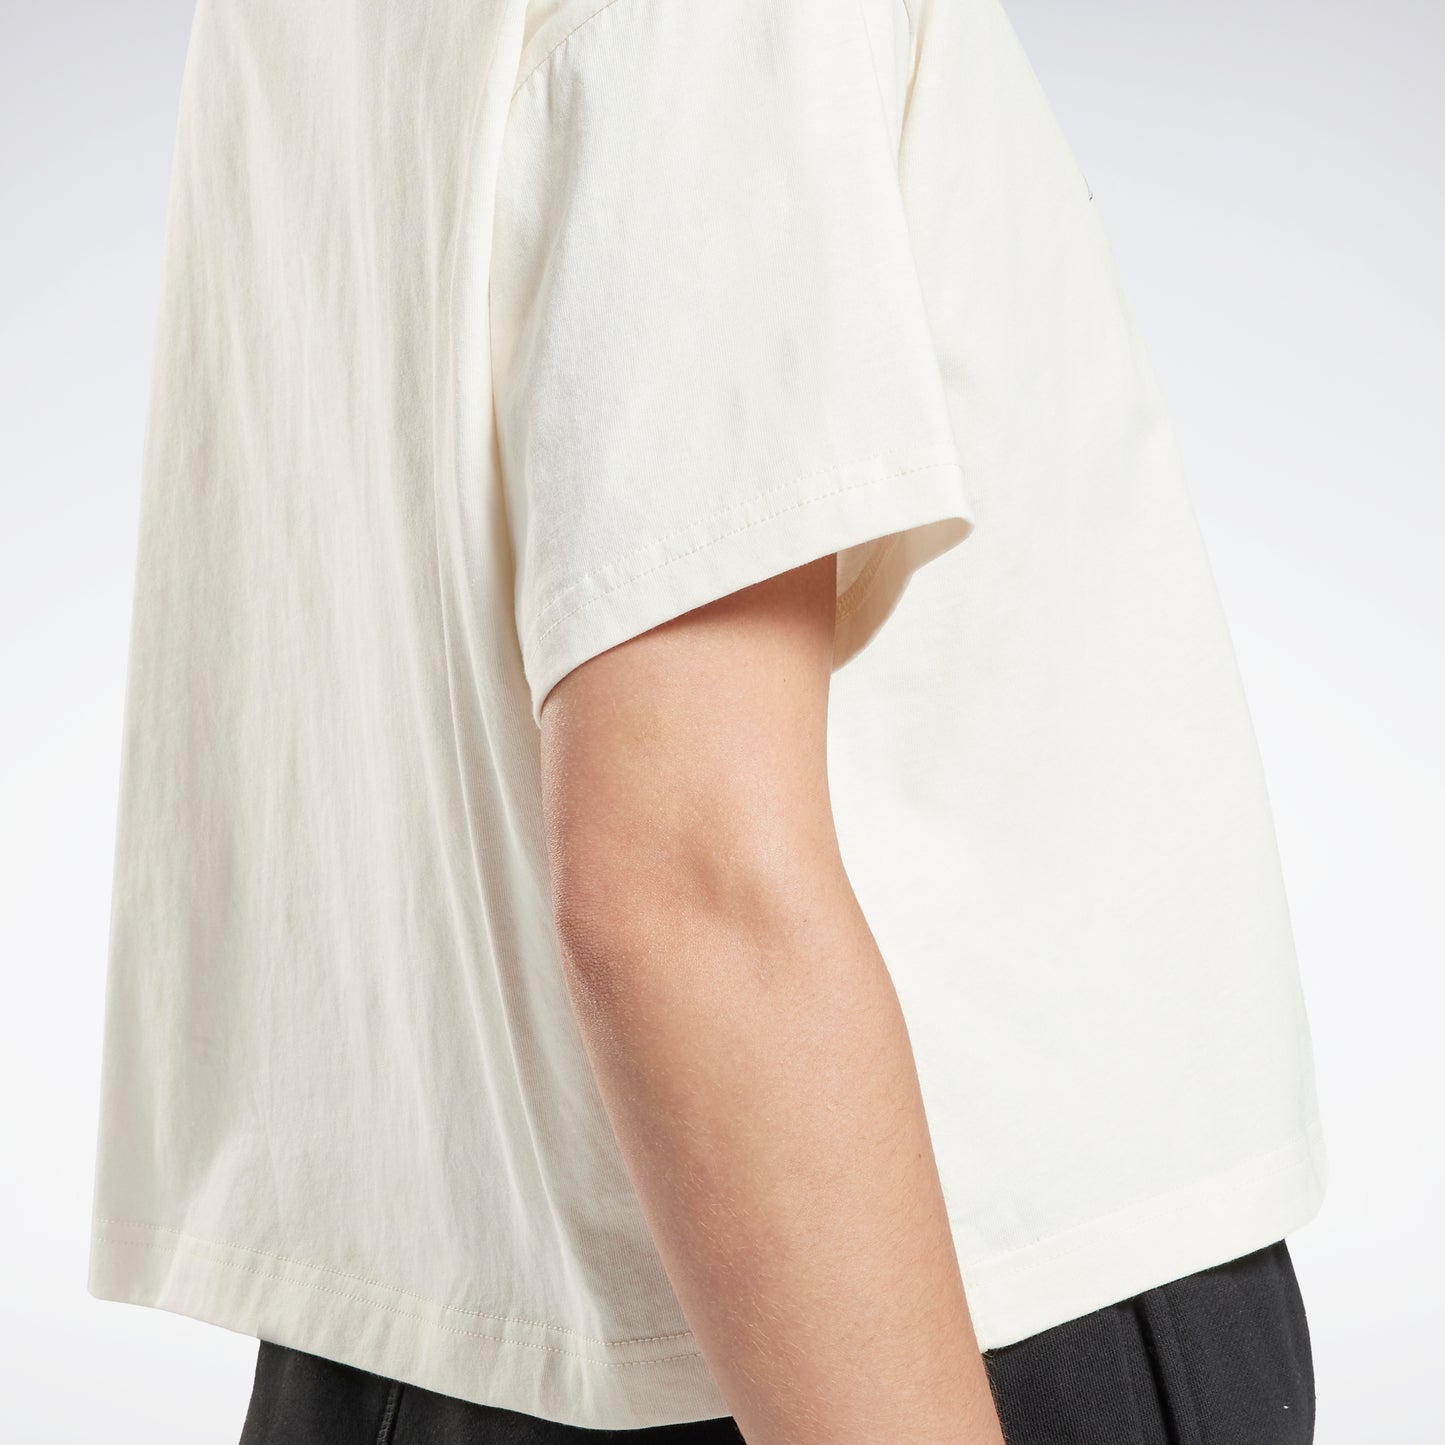 Reebok Apparel Women Classics Winter Pack T-Shirt Clawht